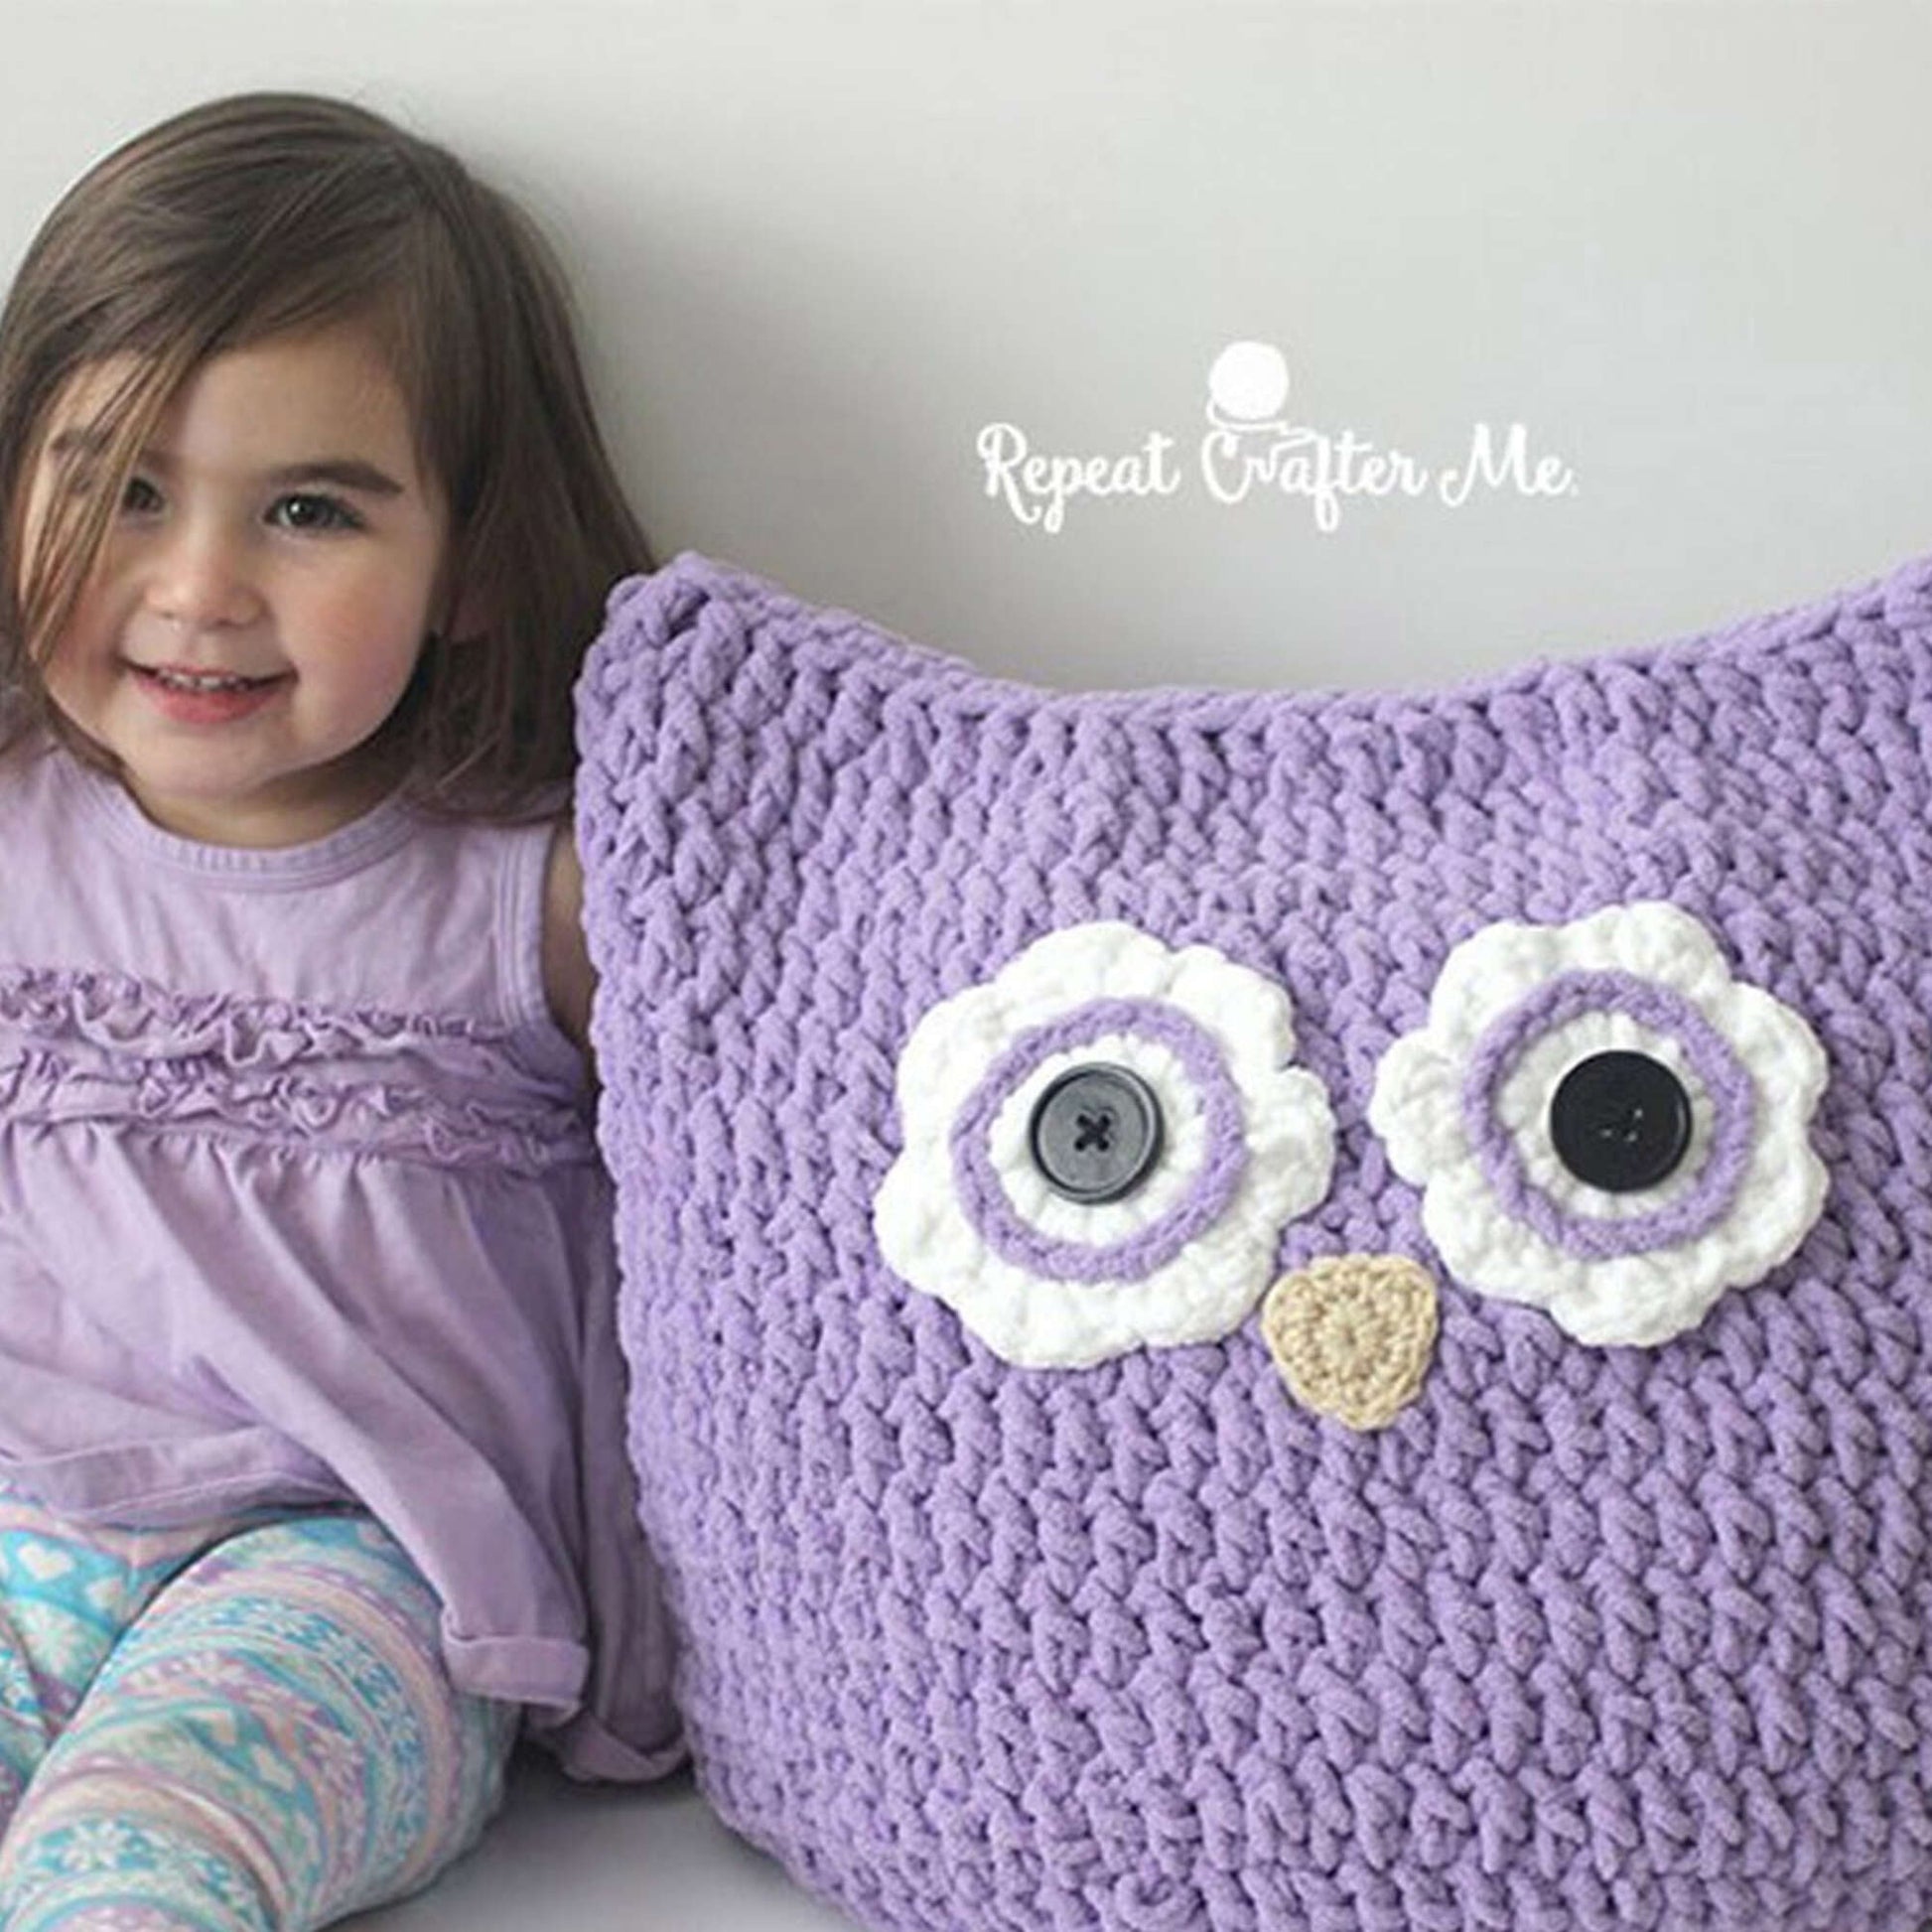 Bernat Oversized Owl Pillow To Crochet Crochet Pillow made in Bernat Super Value yarn